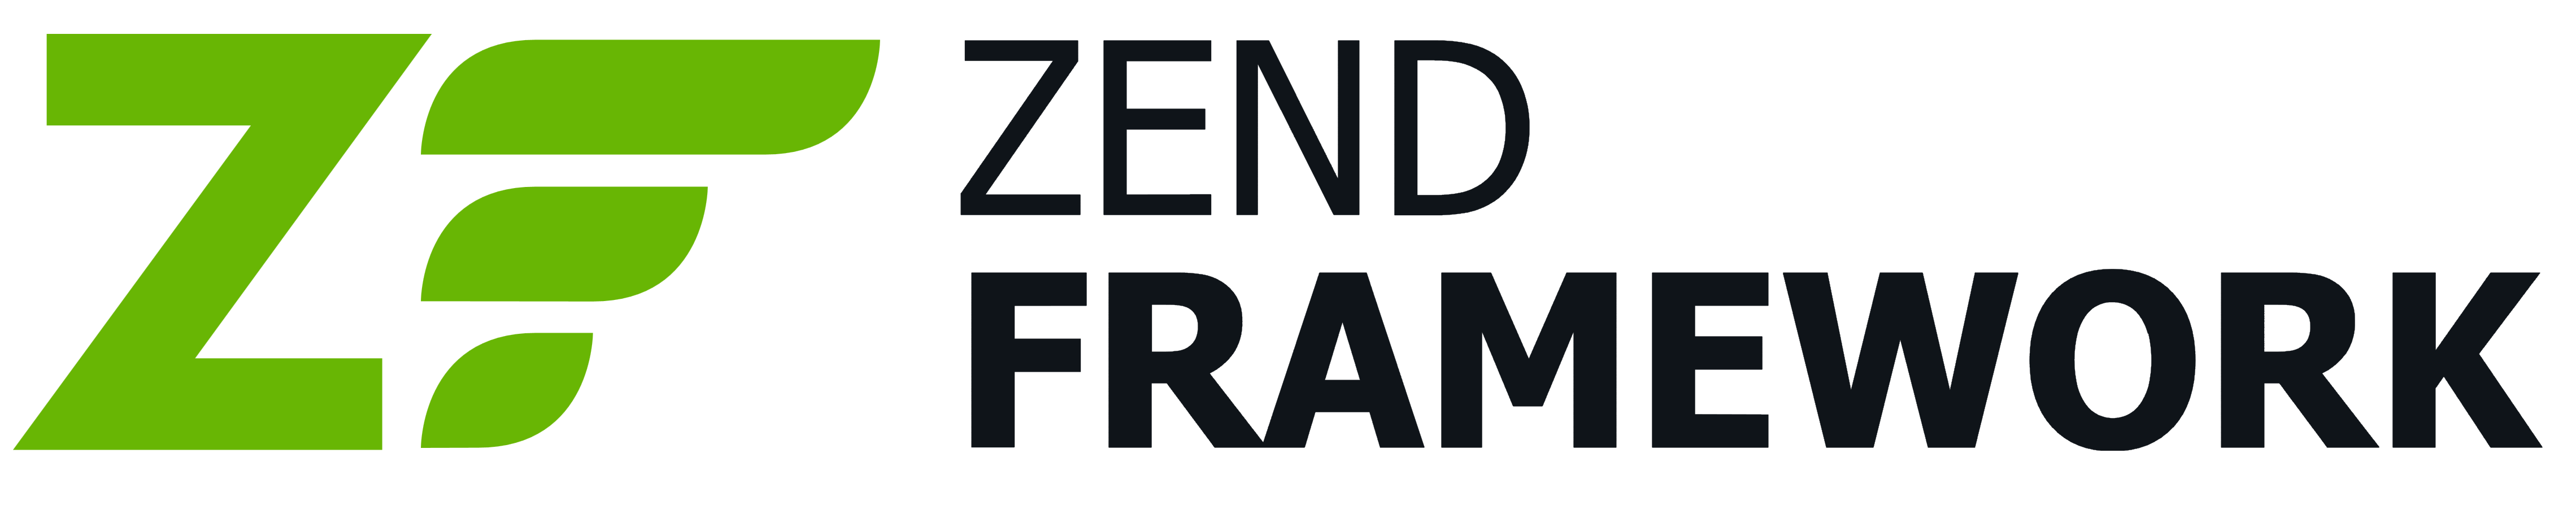 Zend Framework logo, logotype